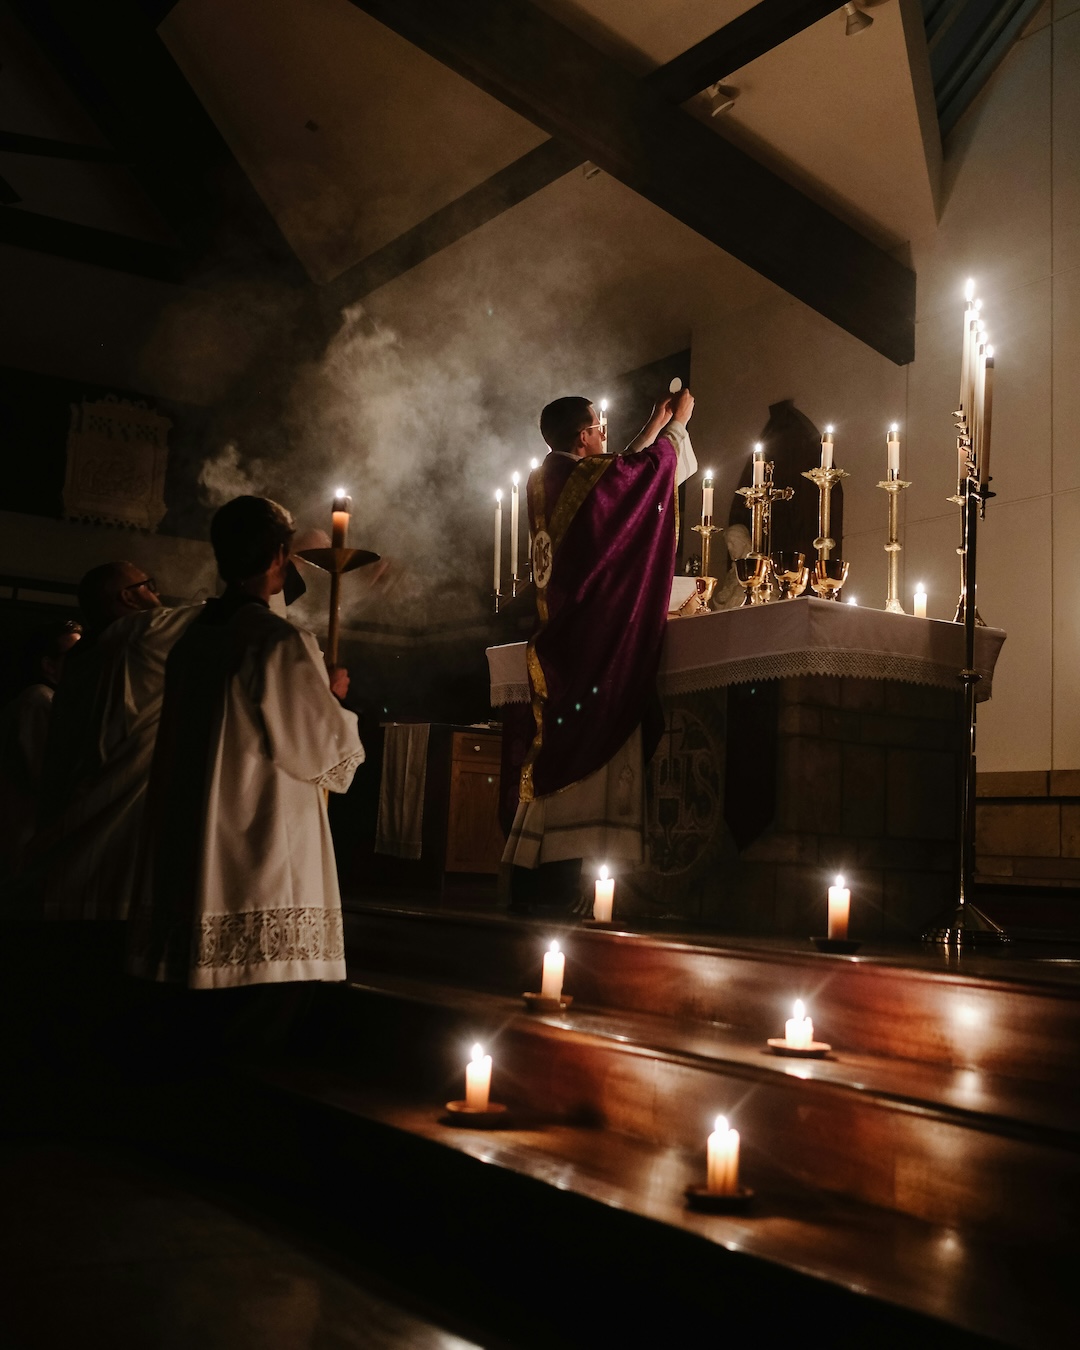 Priest Celebrates Mass by Candlelight